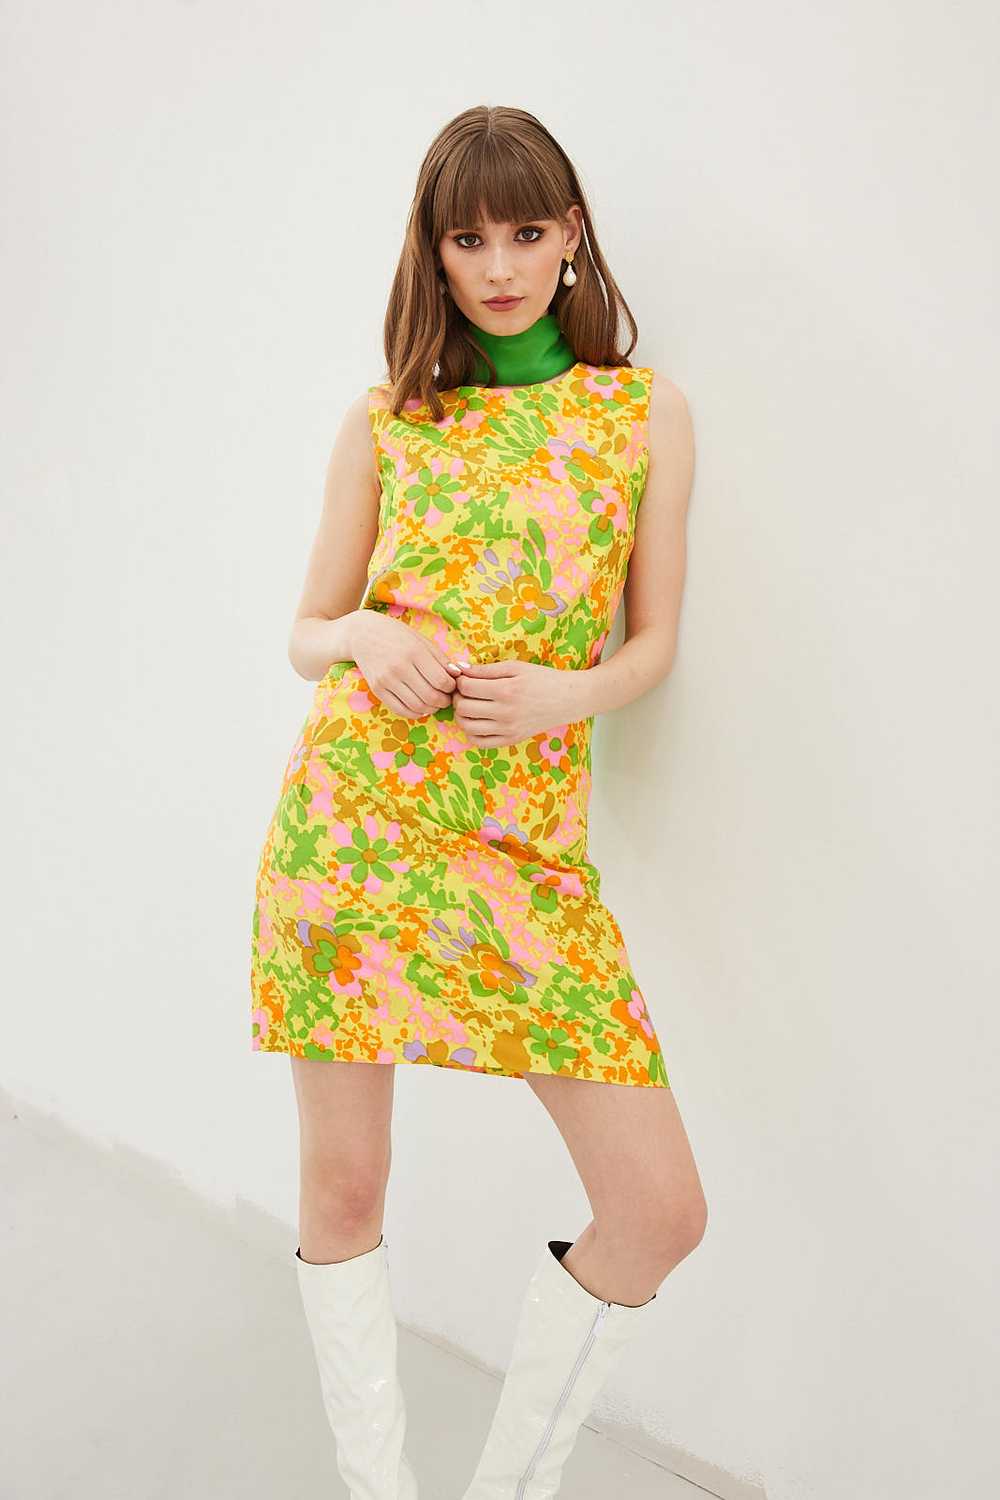 Sixties floral cotton dress - image 1